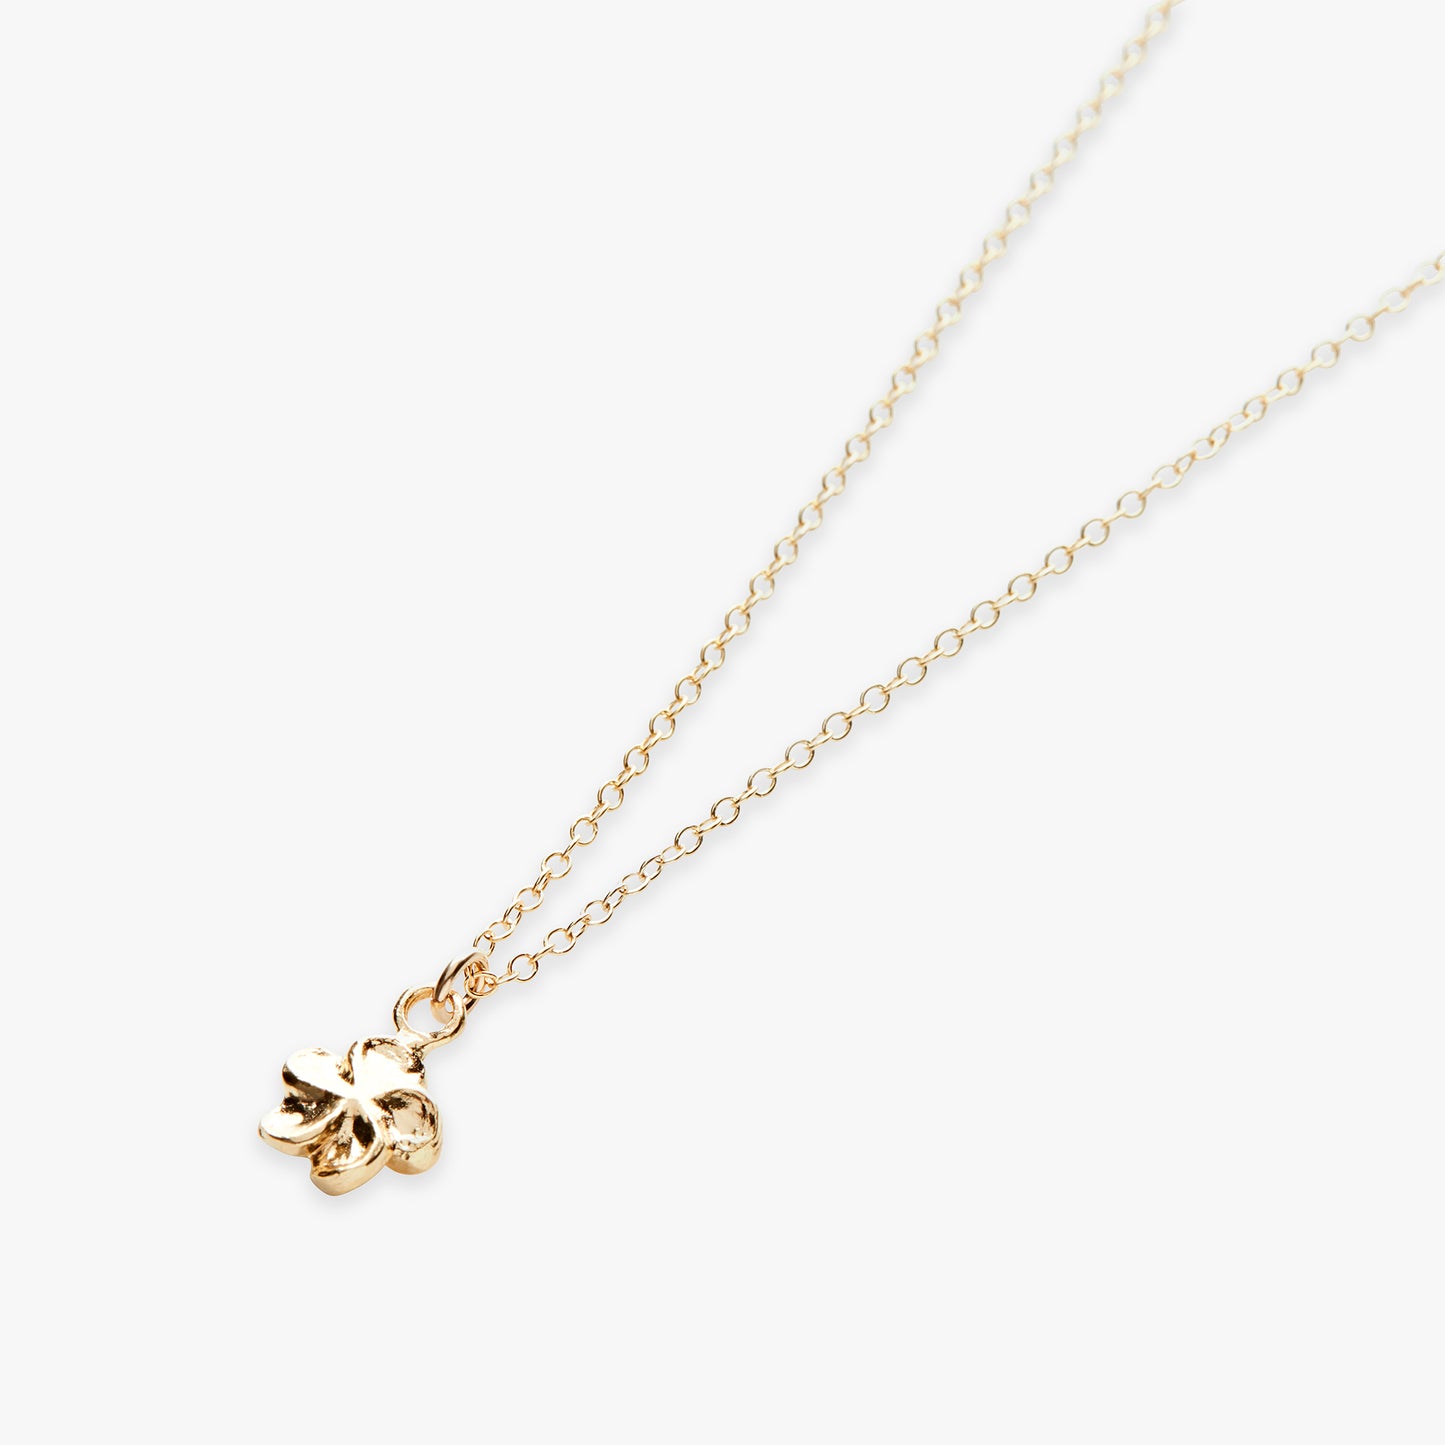 Plumeria pendant necklace gold filled